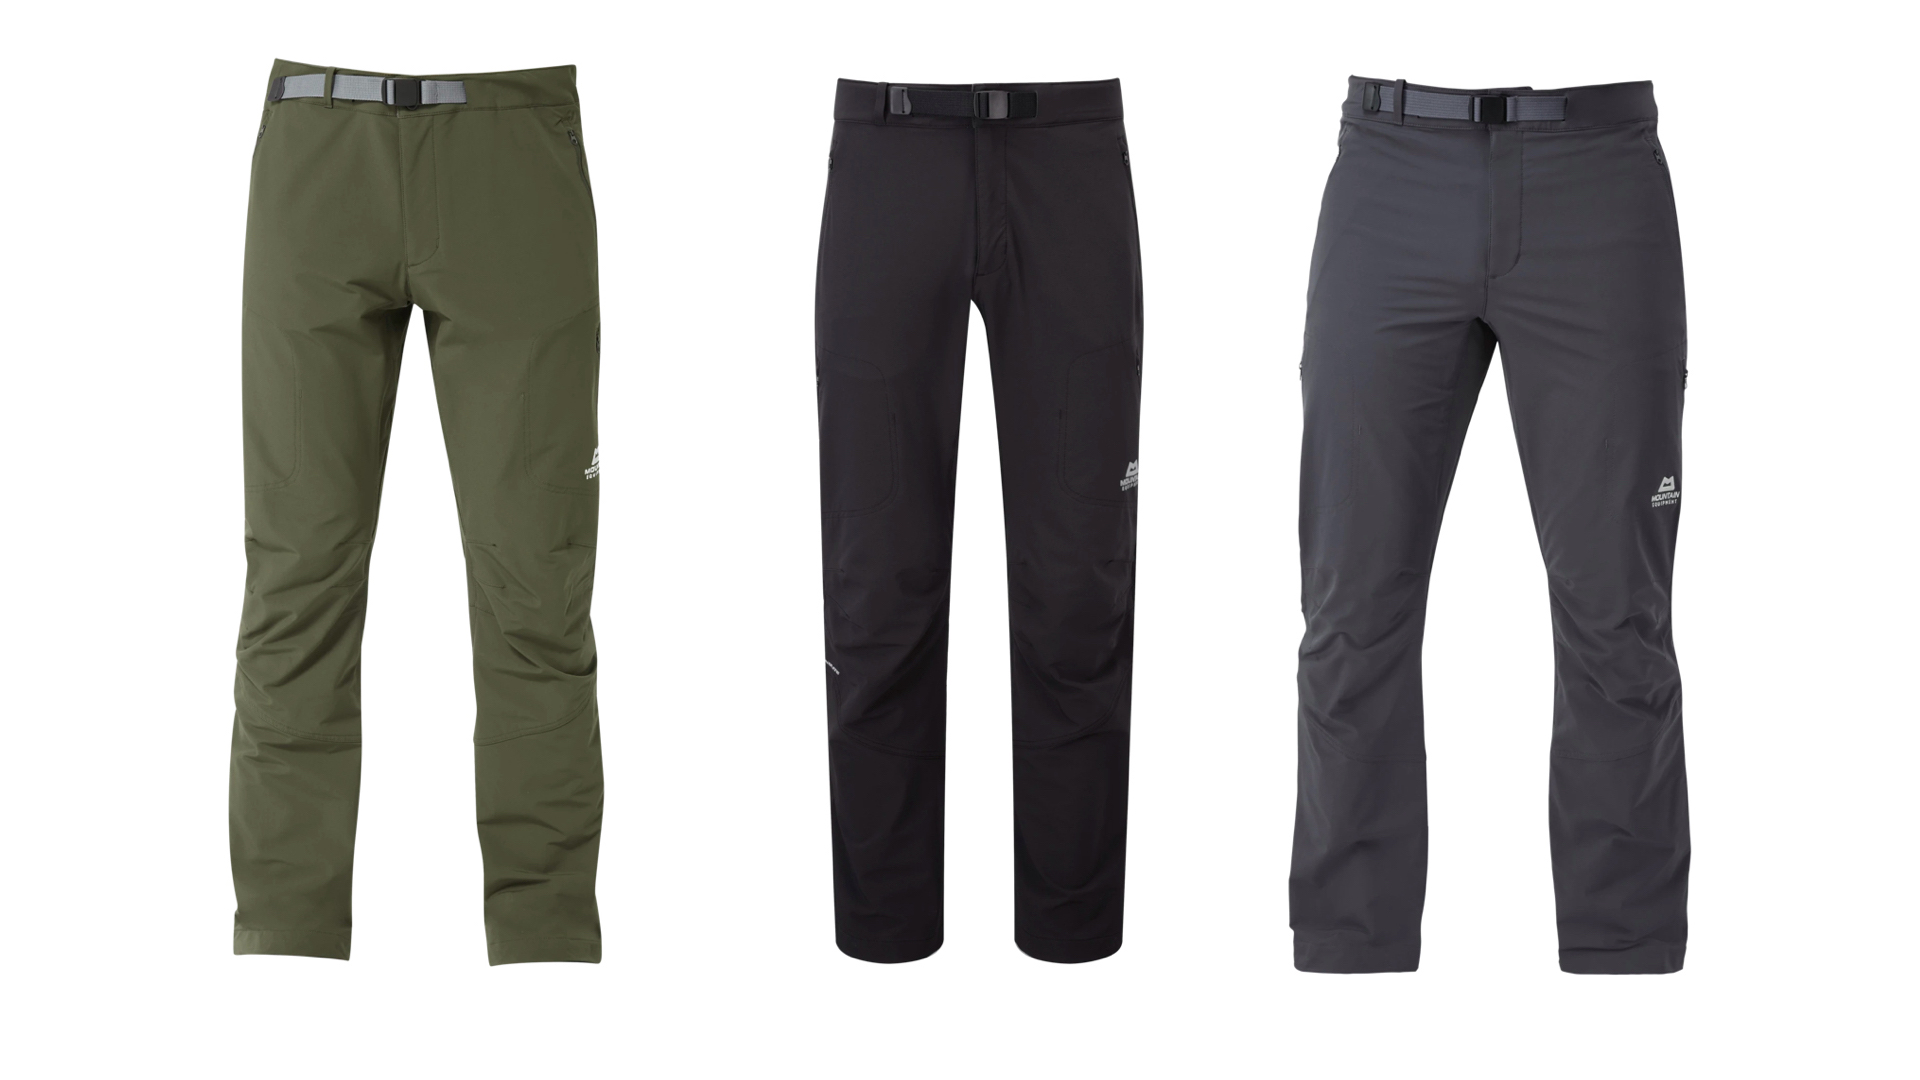 Mountain Equipment - Ibex Pant - Softshell trousers - Black | 30 - Long (UK)